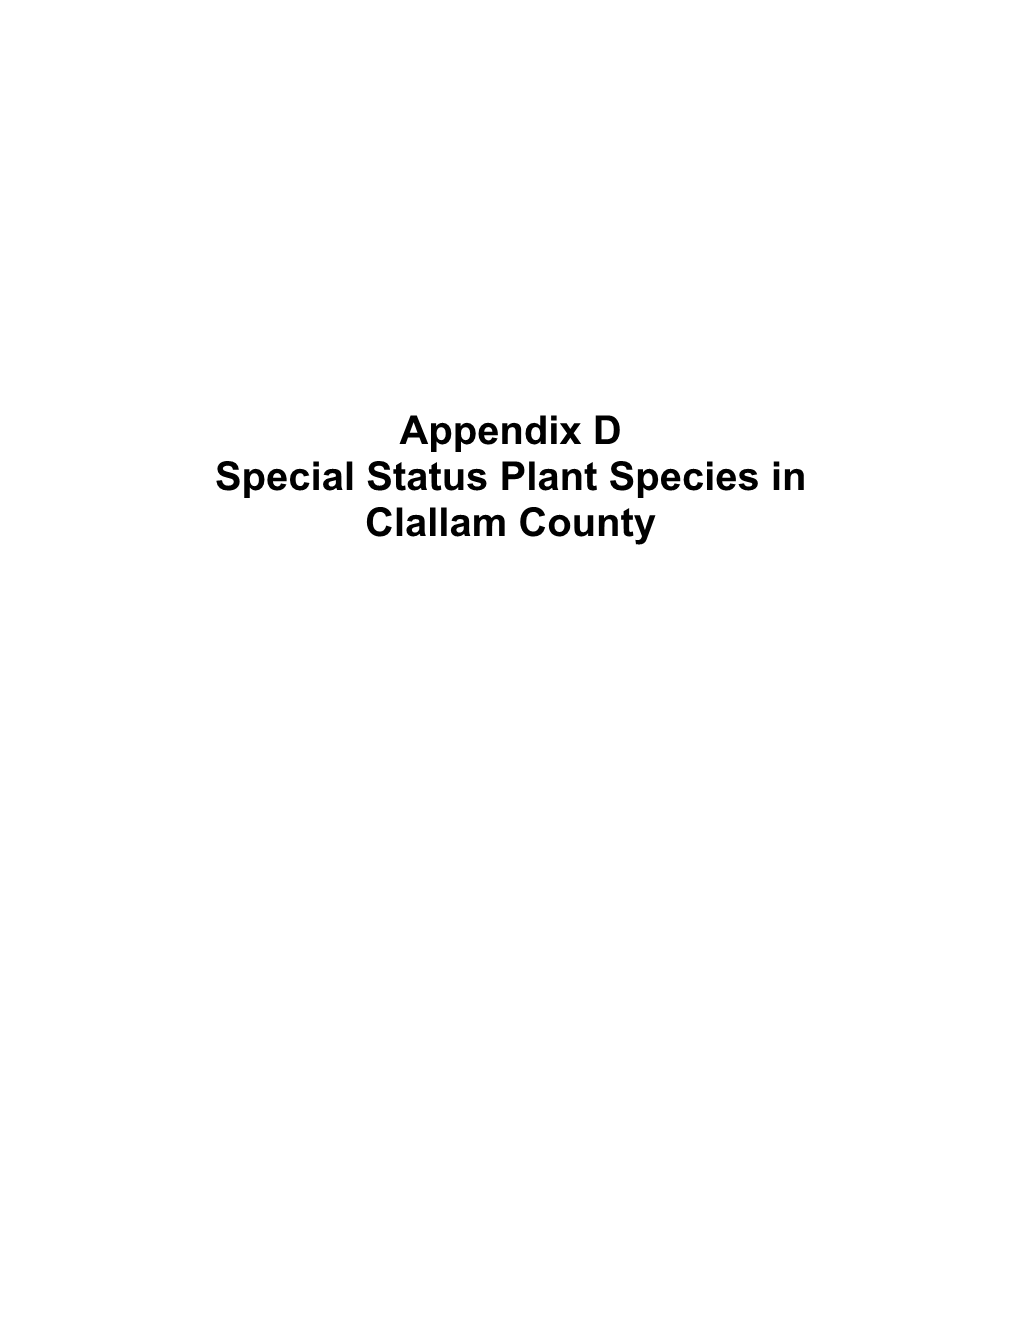 Appendix D Special Status Plant Species in Clallam County